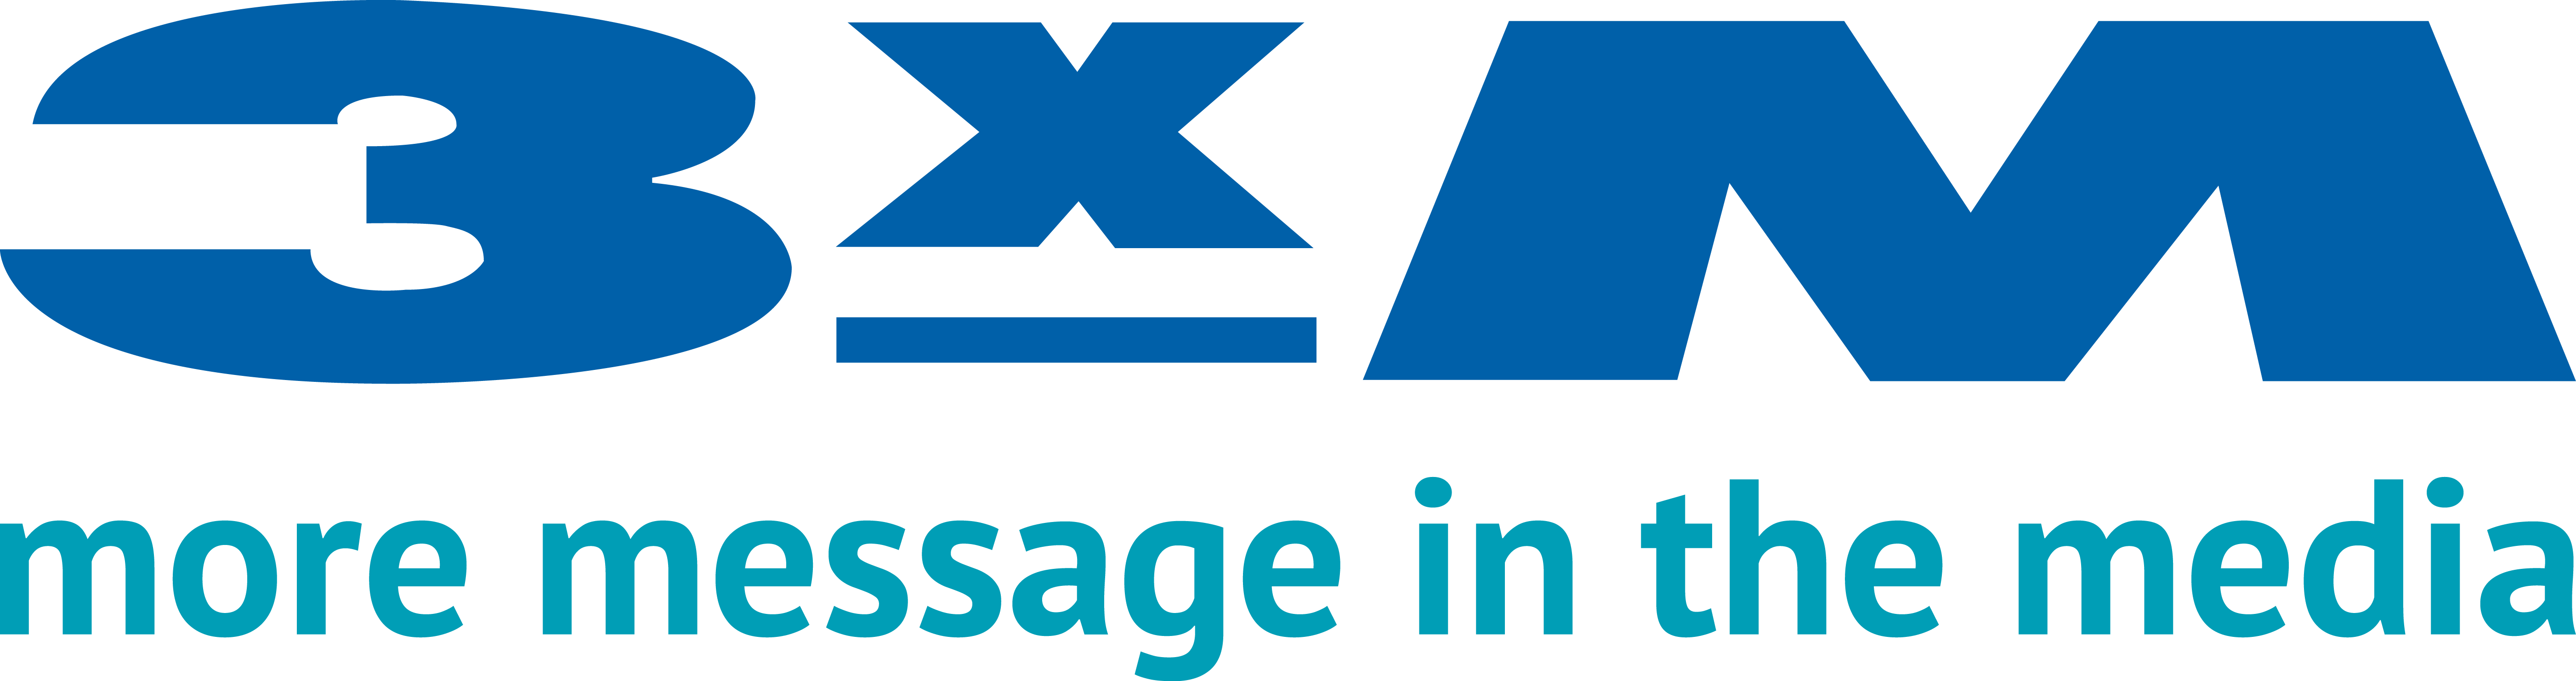 3xM_logo